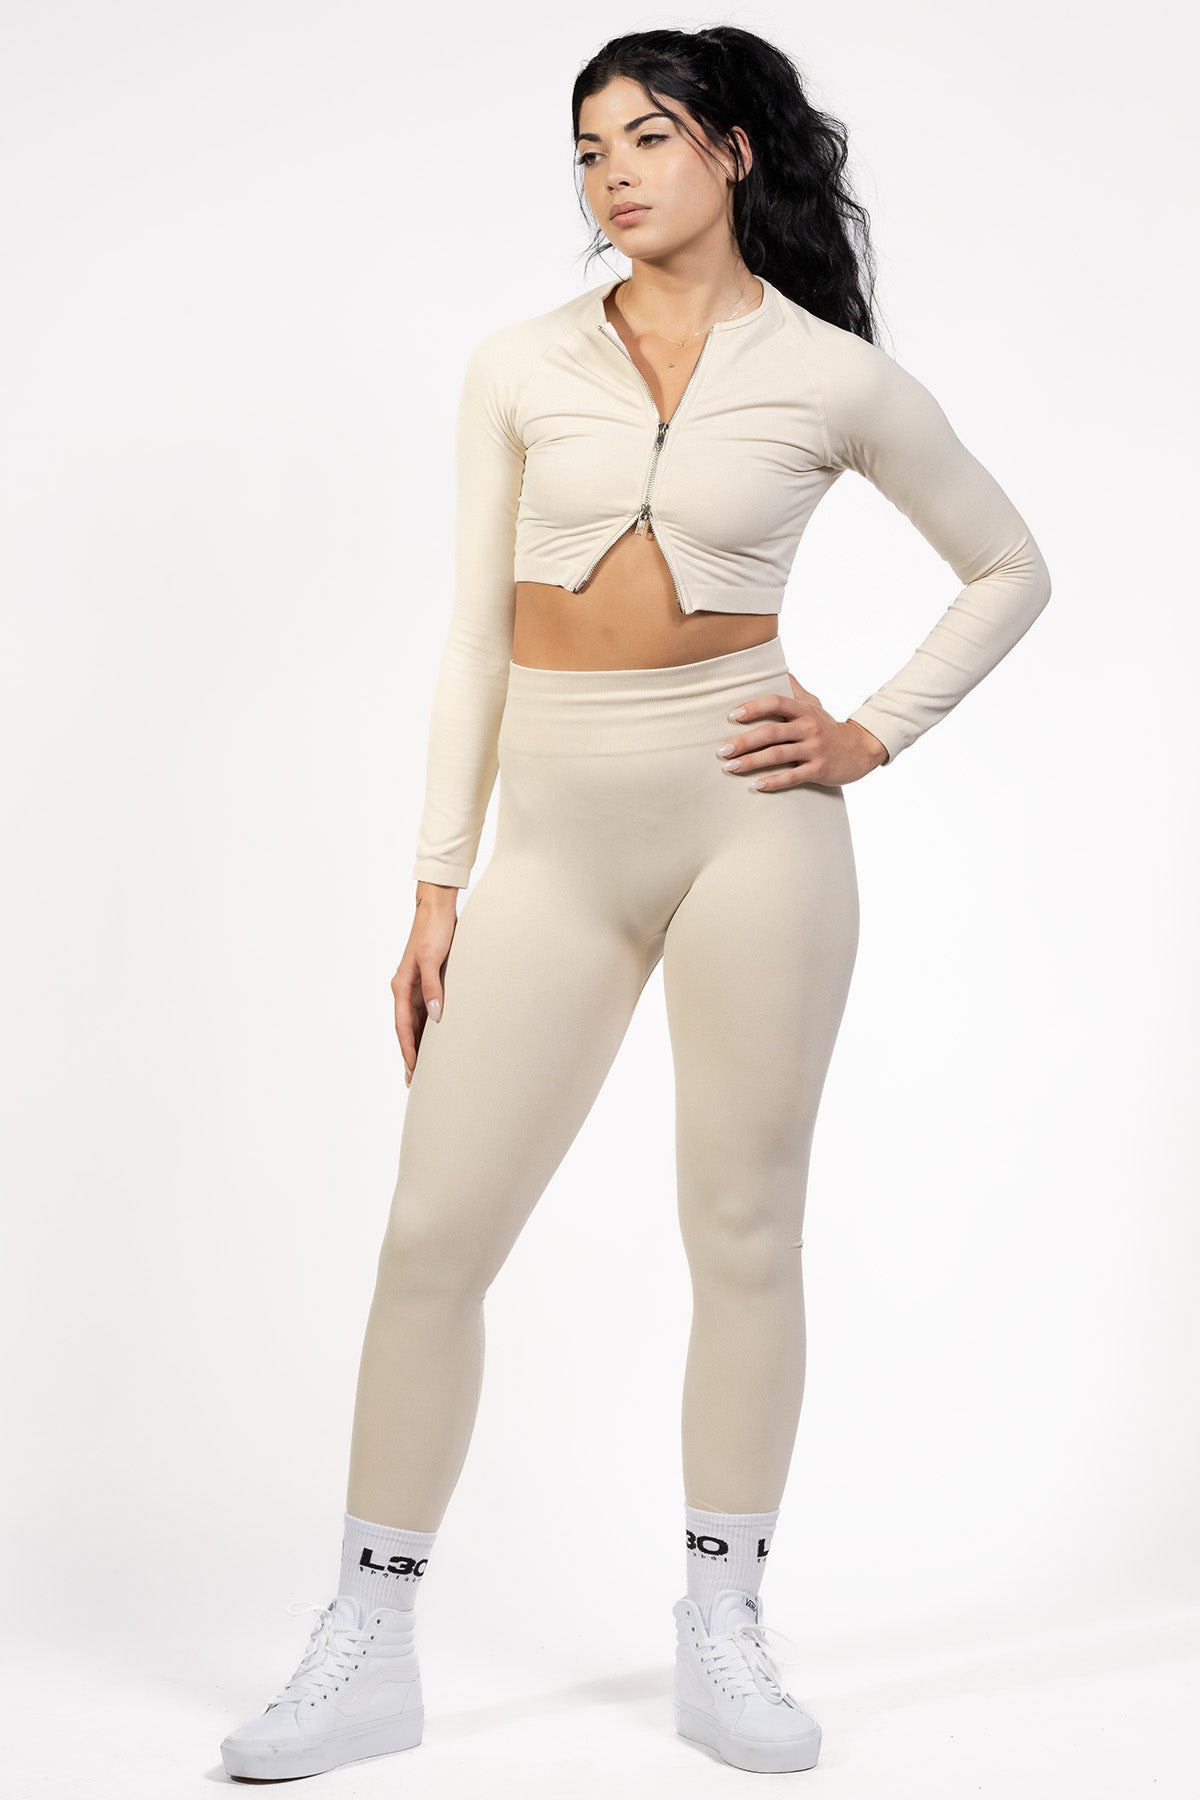 Zara set seamless leggings and top